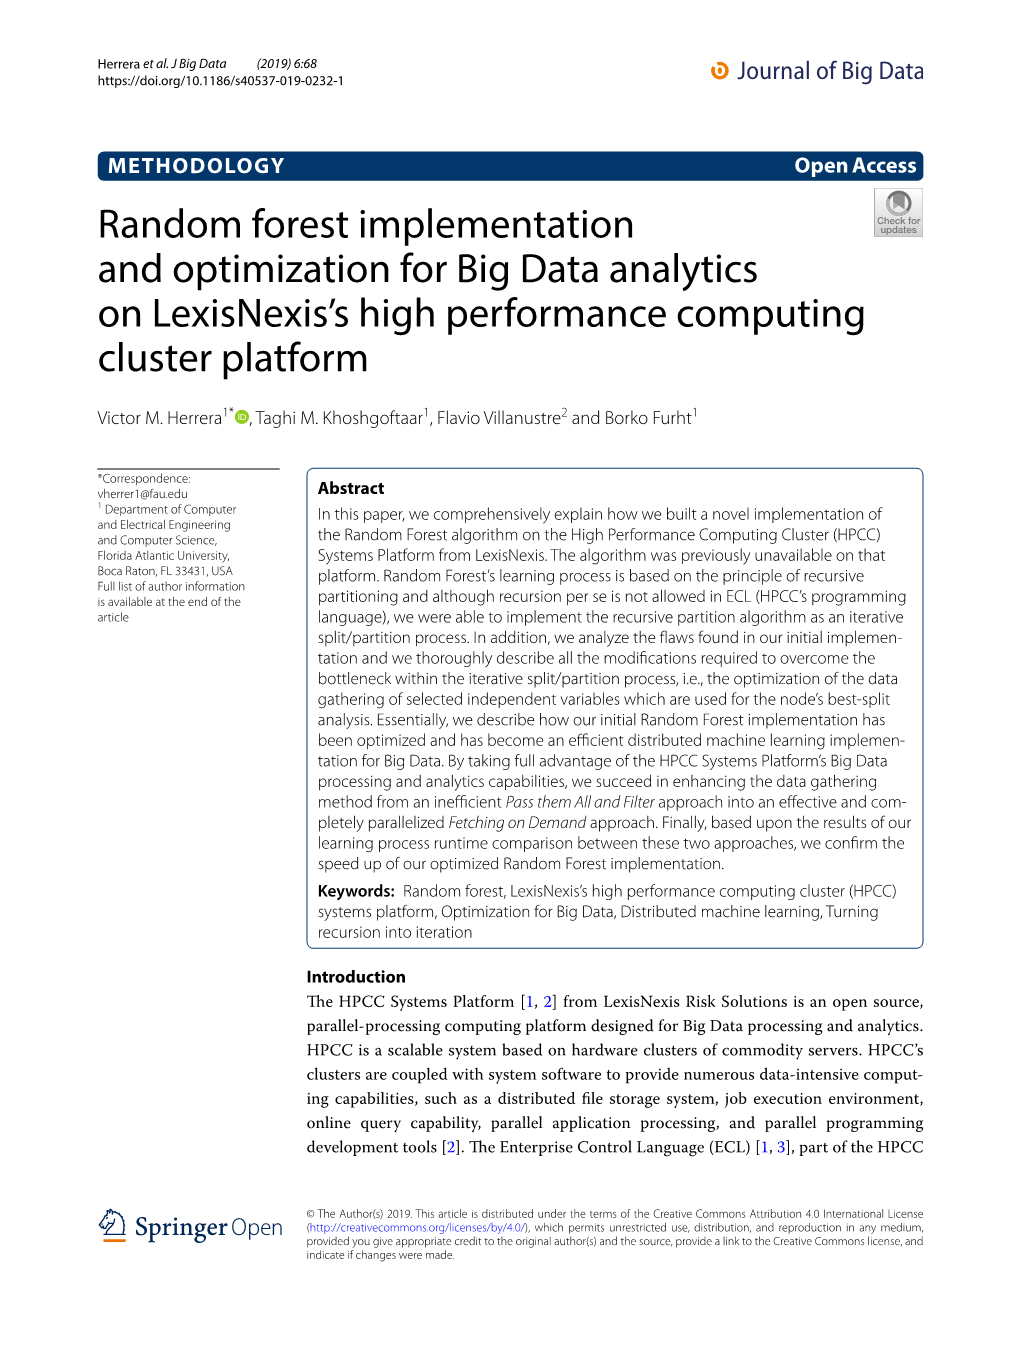 Random Forest Implementation and Optimization for Big Data Analytics on Lexisnexis’S High Performance Computing Cluster Platform